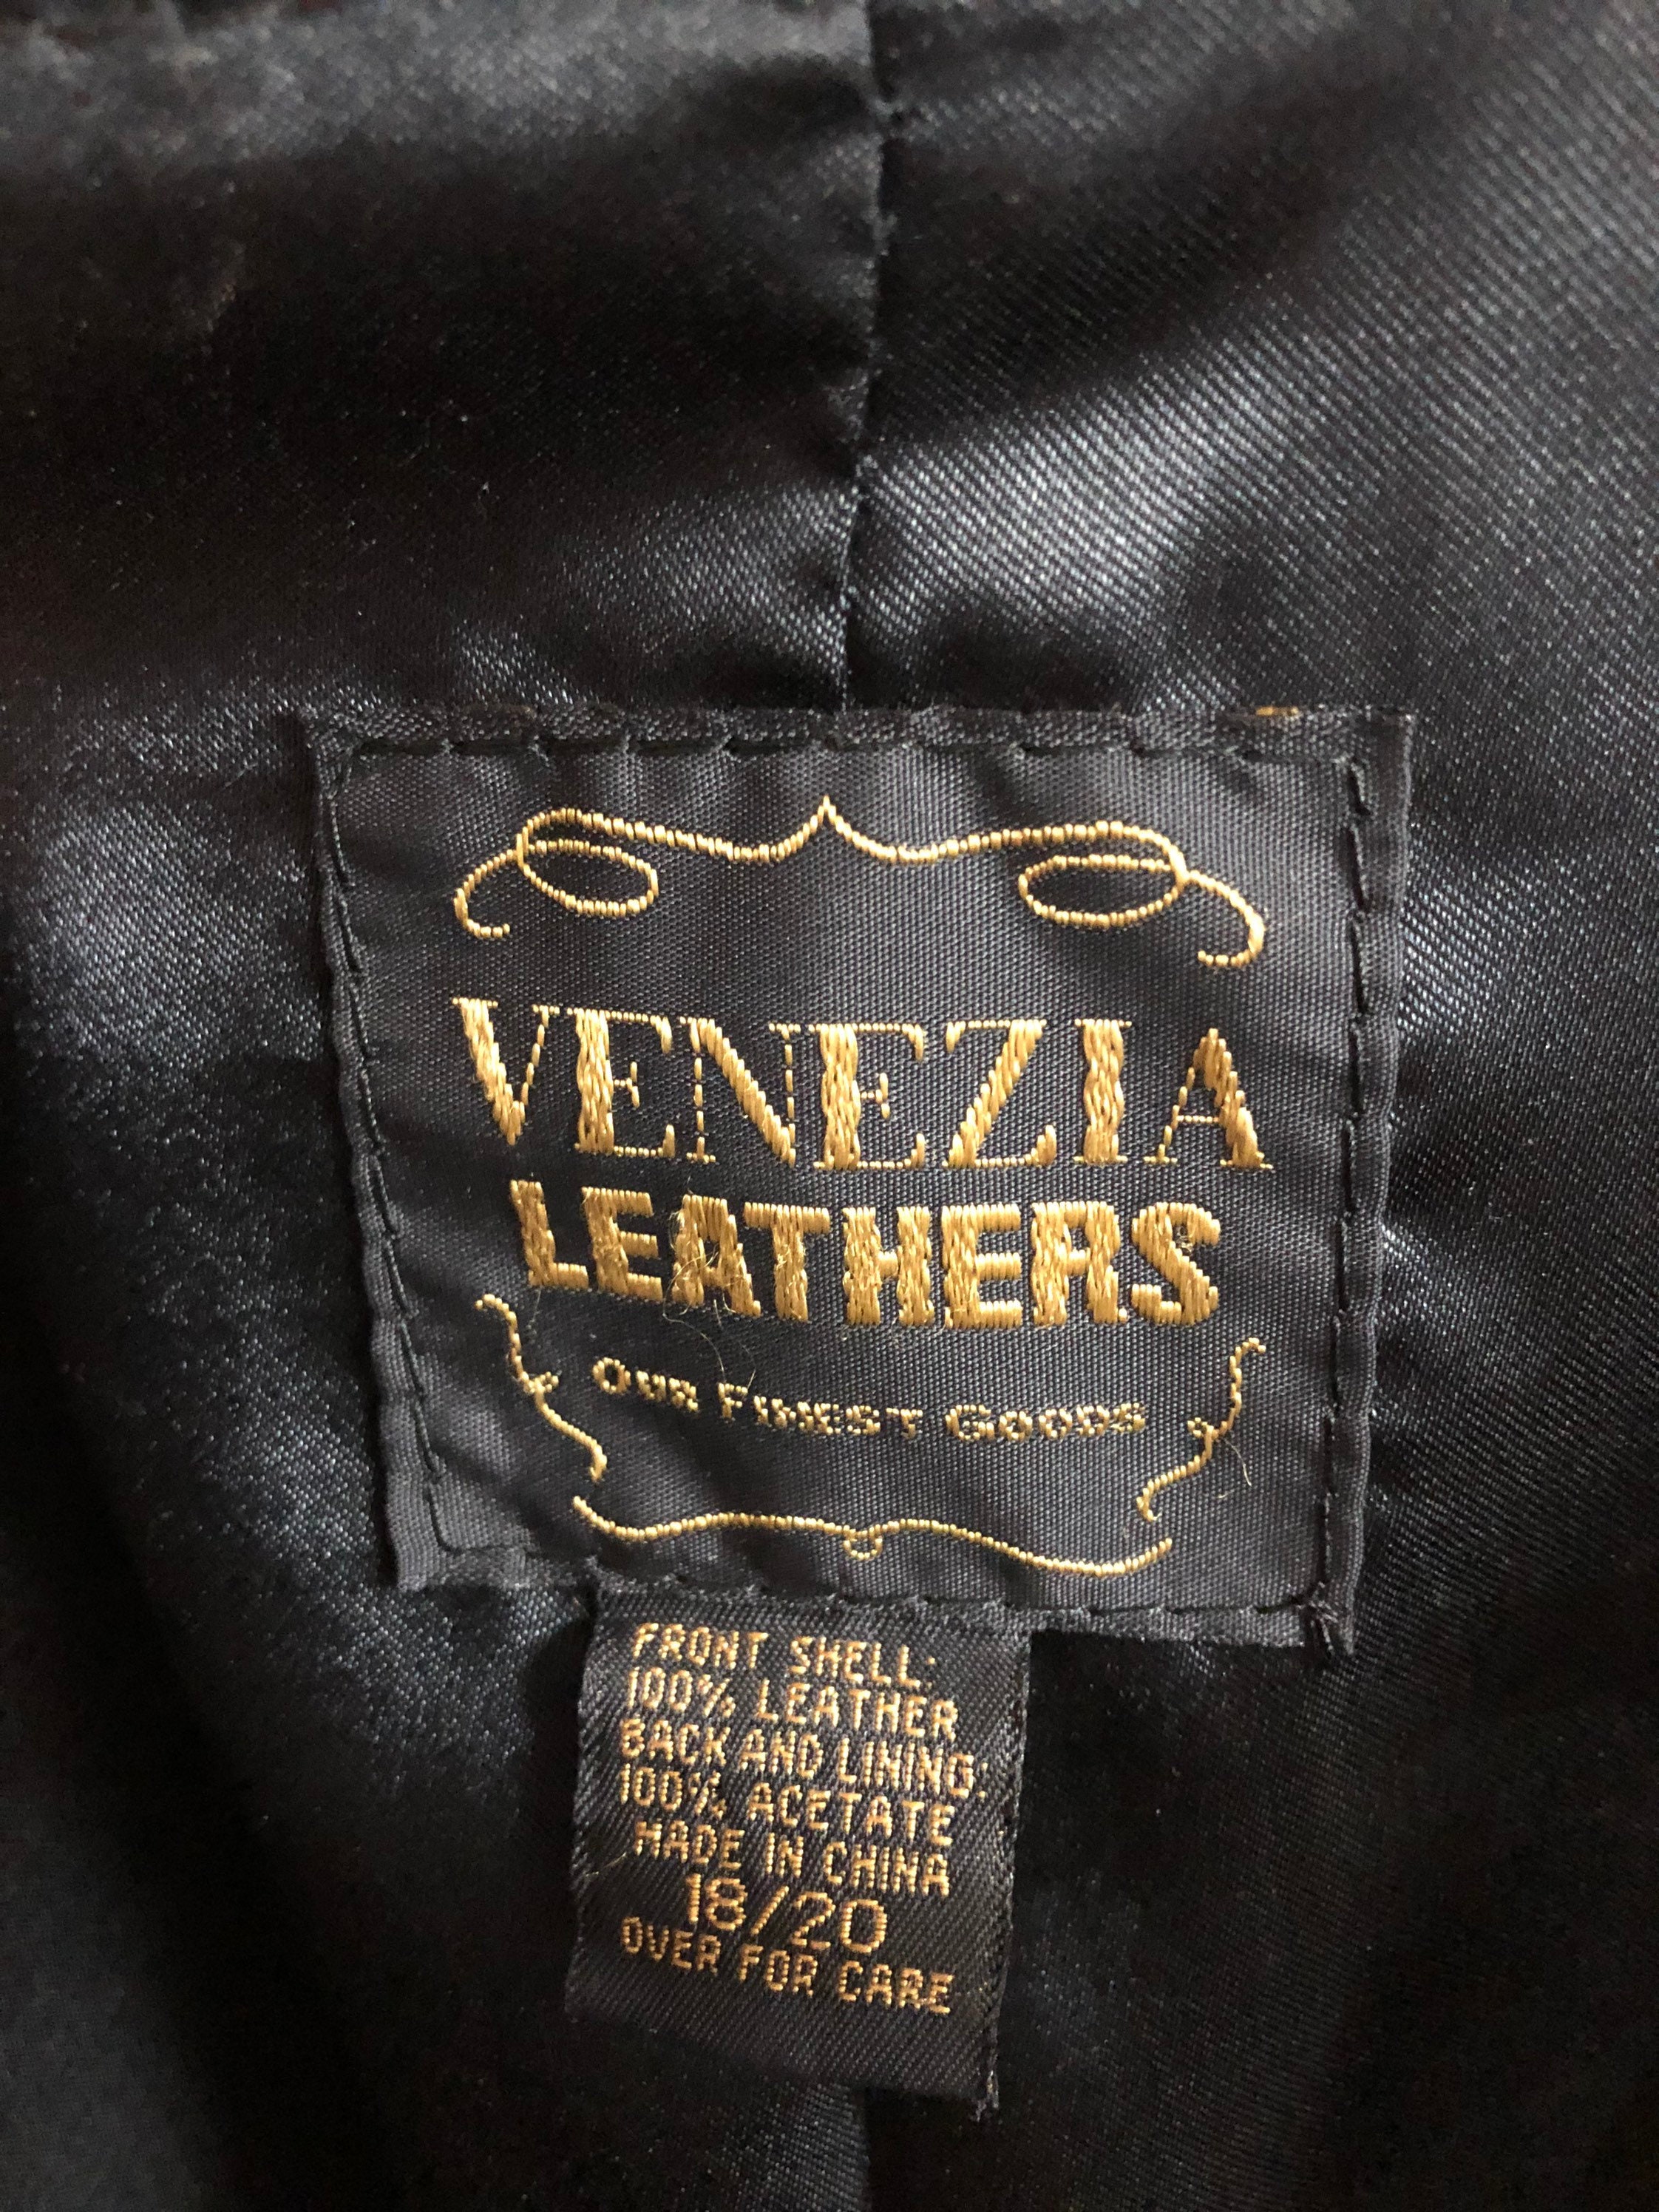 Venezia Leather Womens Vest Size 18/20 Very Good Condition | Etsy